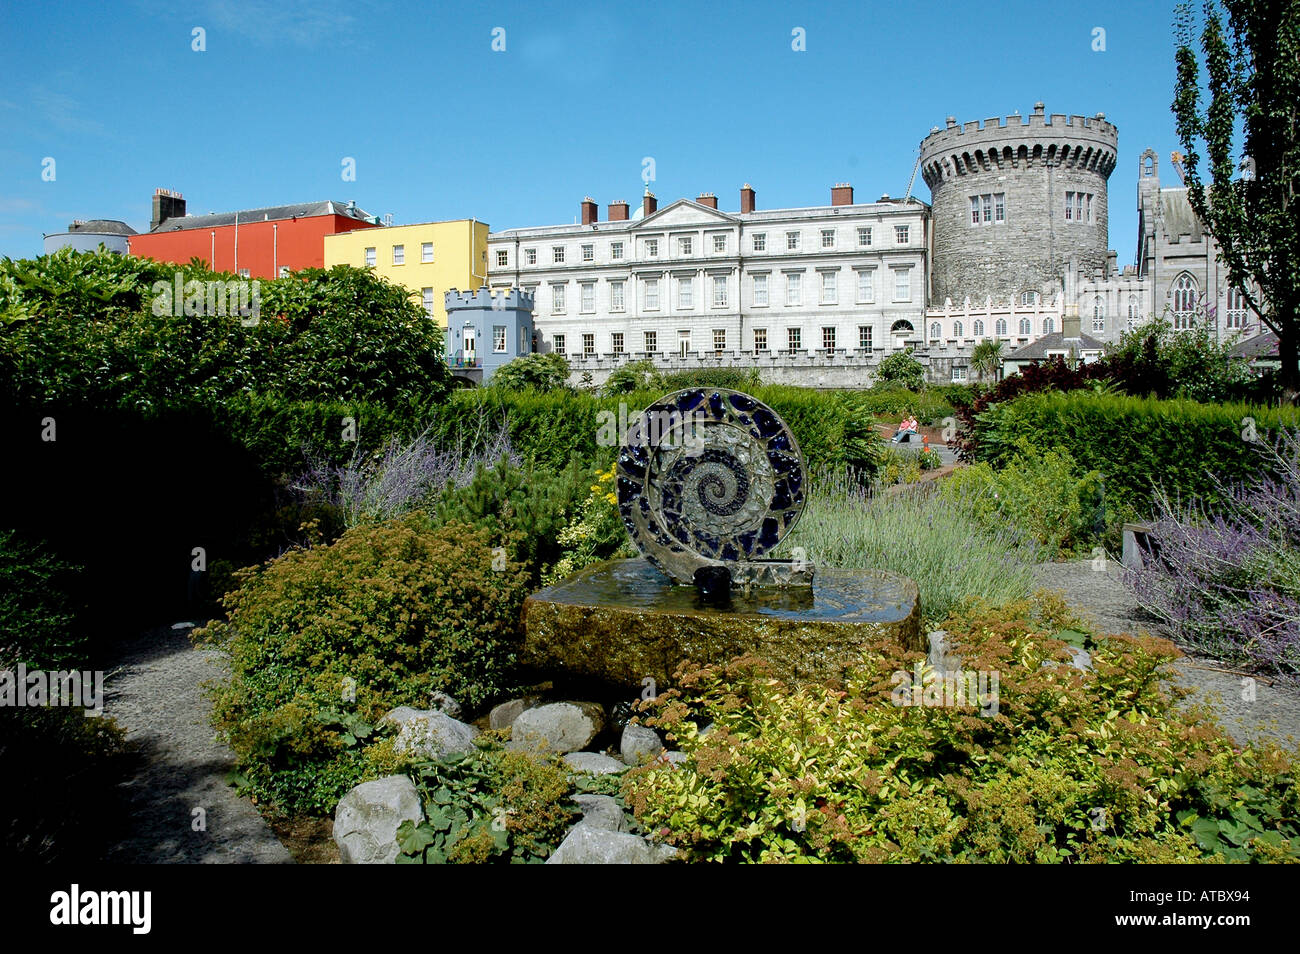 Irland-Dublin Schloss und Gärten Stockfoto